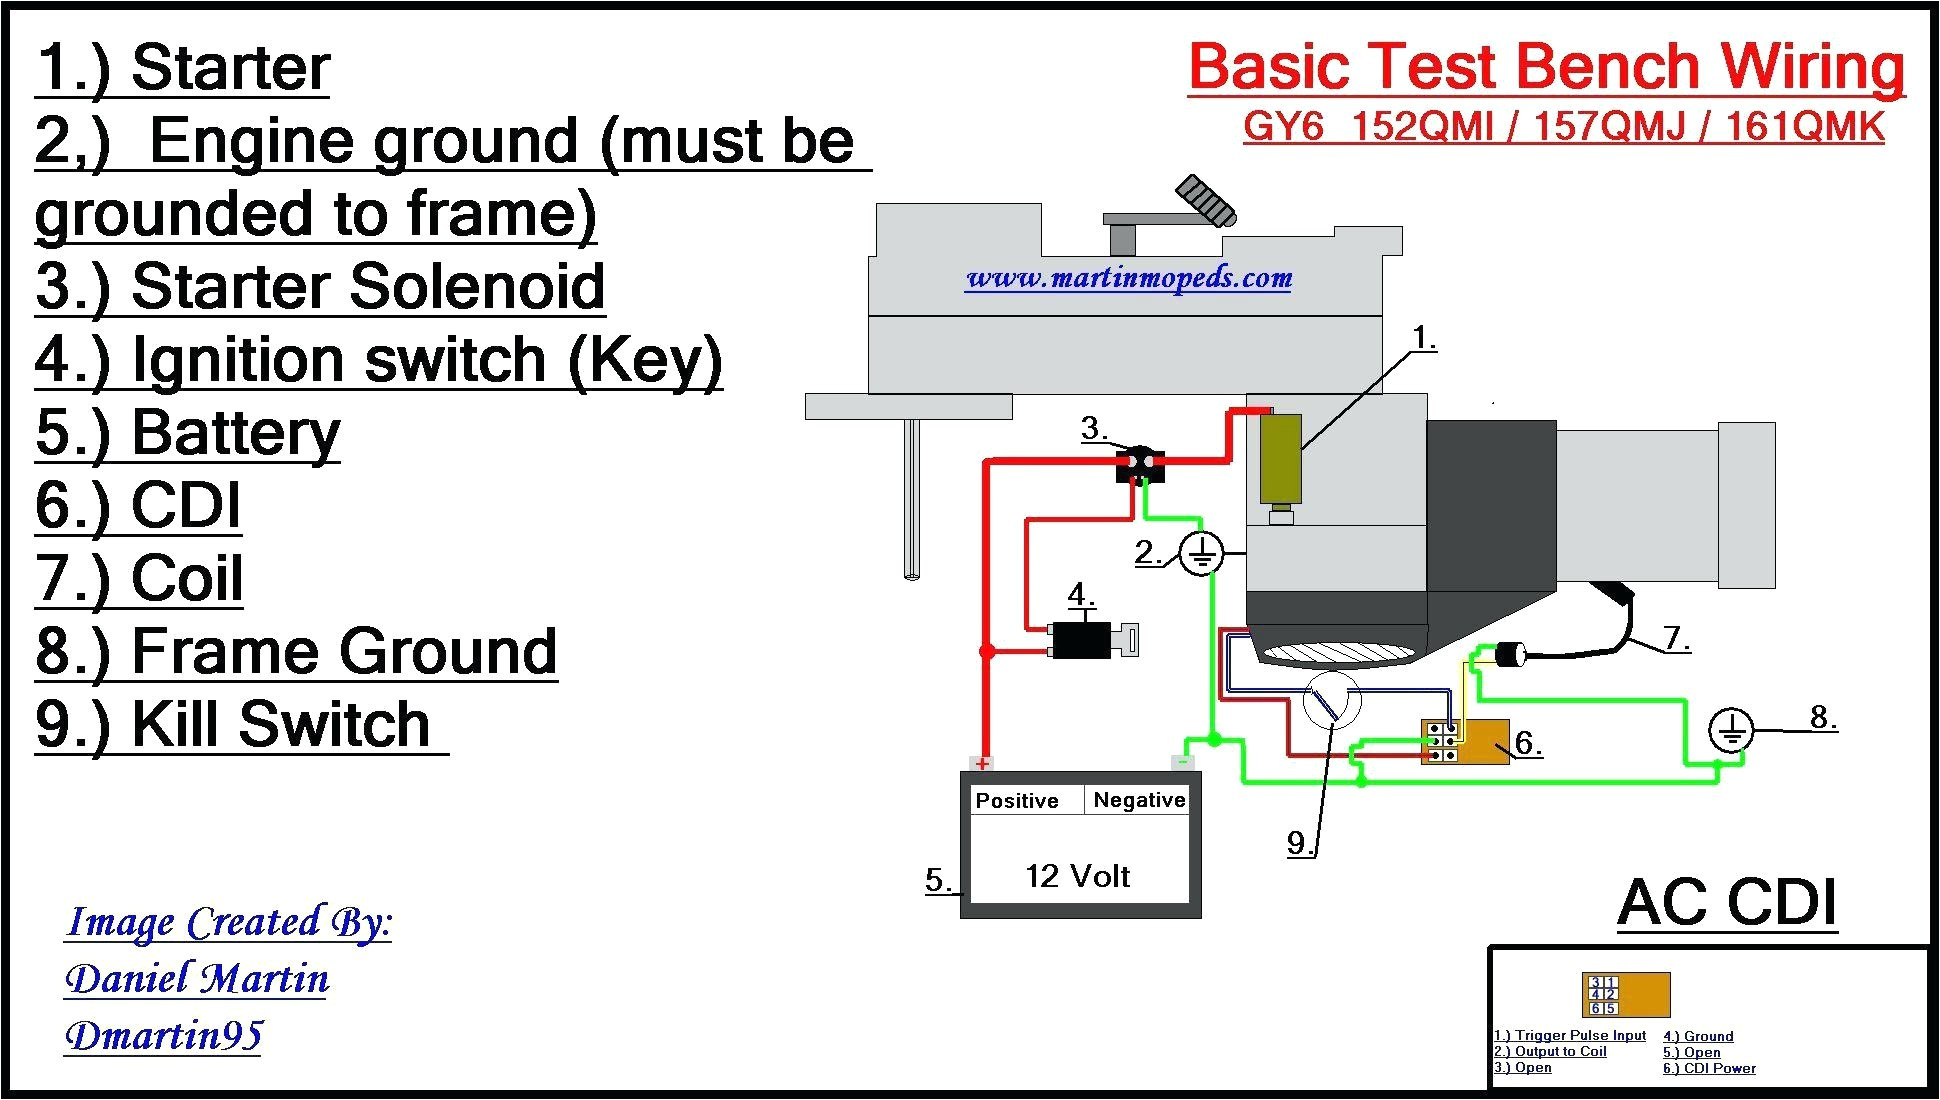 dc 5 wire cdi diagram wiring diagram datasource5 pin cdi wiring diagram wiring diagrams konsult dc